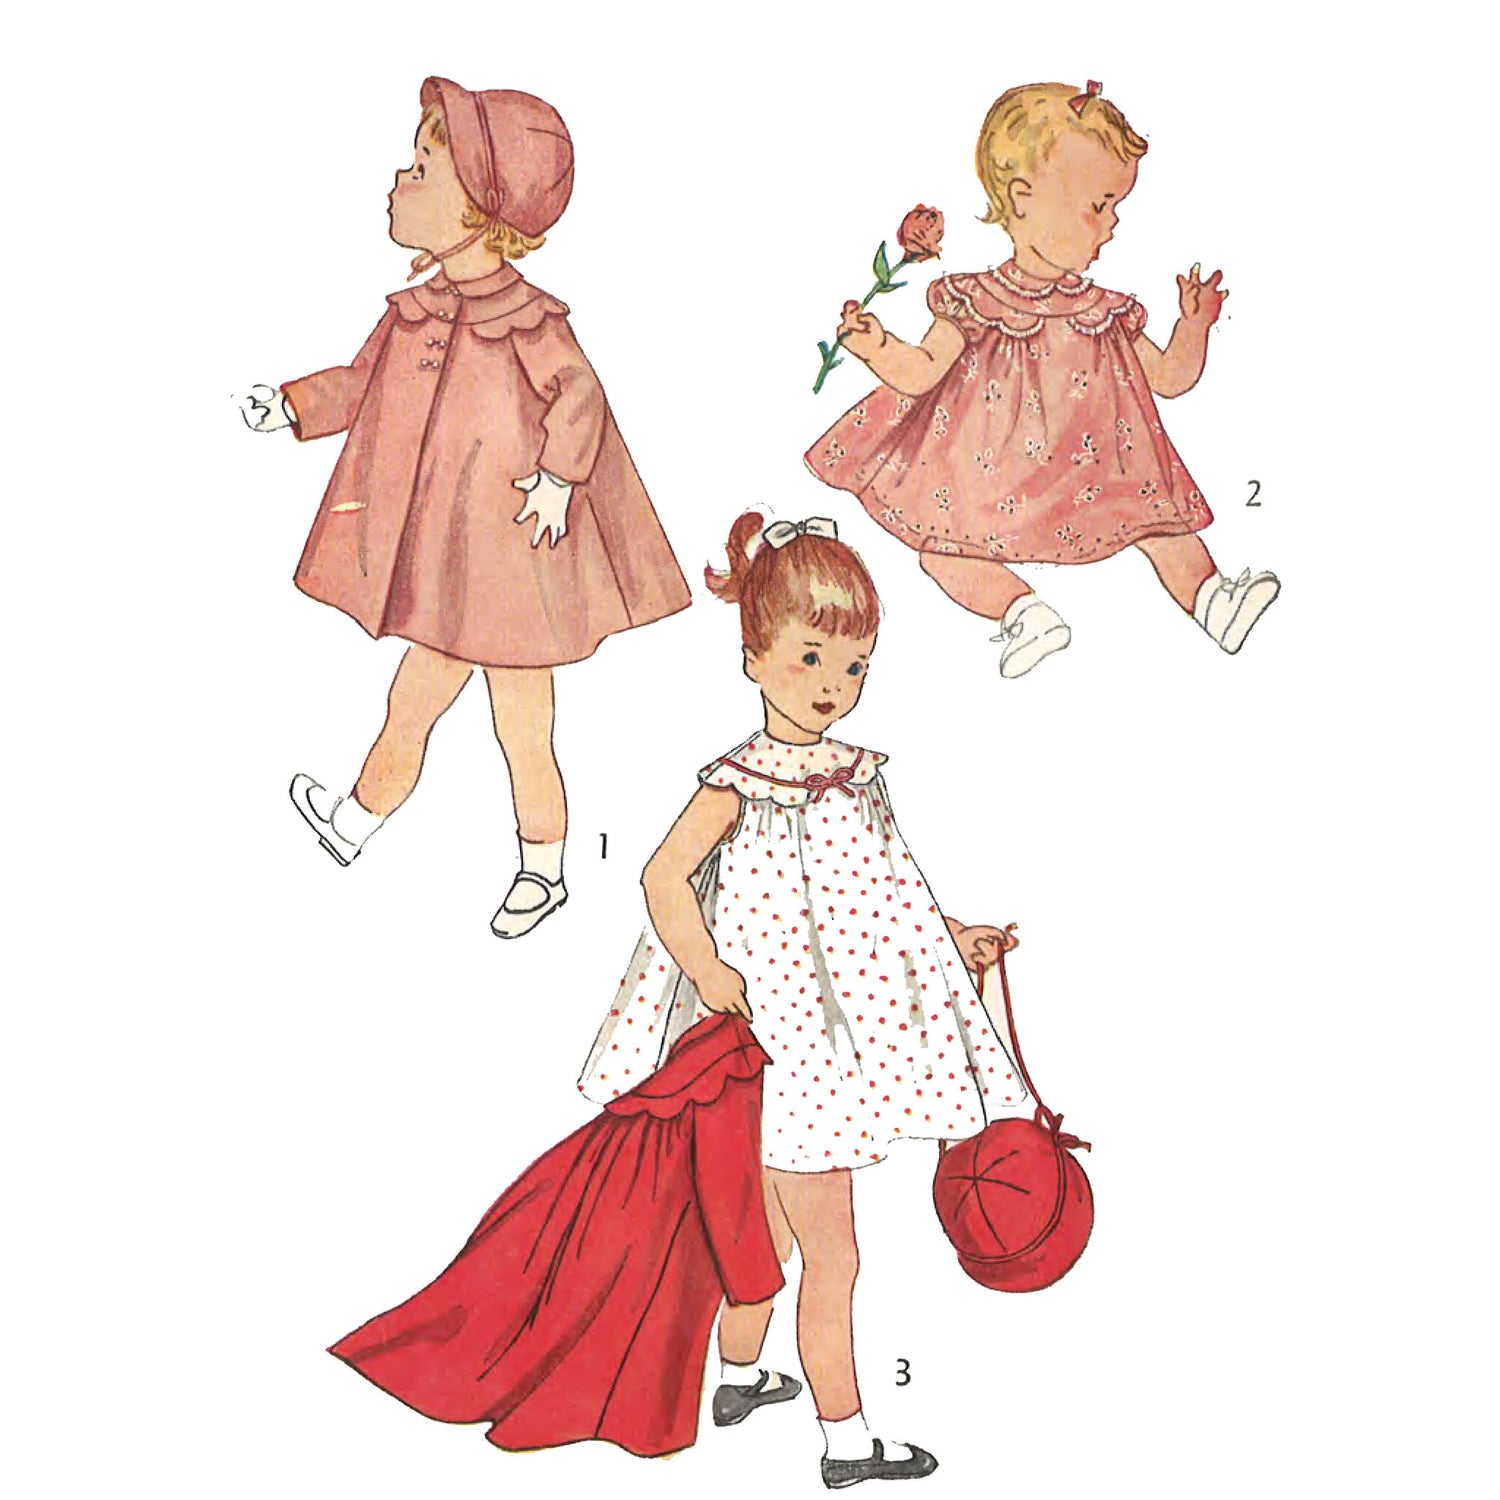 Little girls in dress, coat and bonnet.